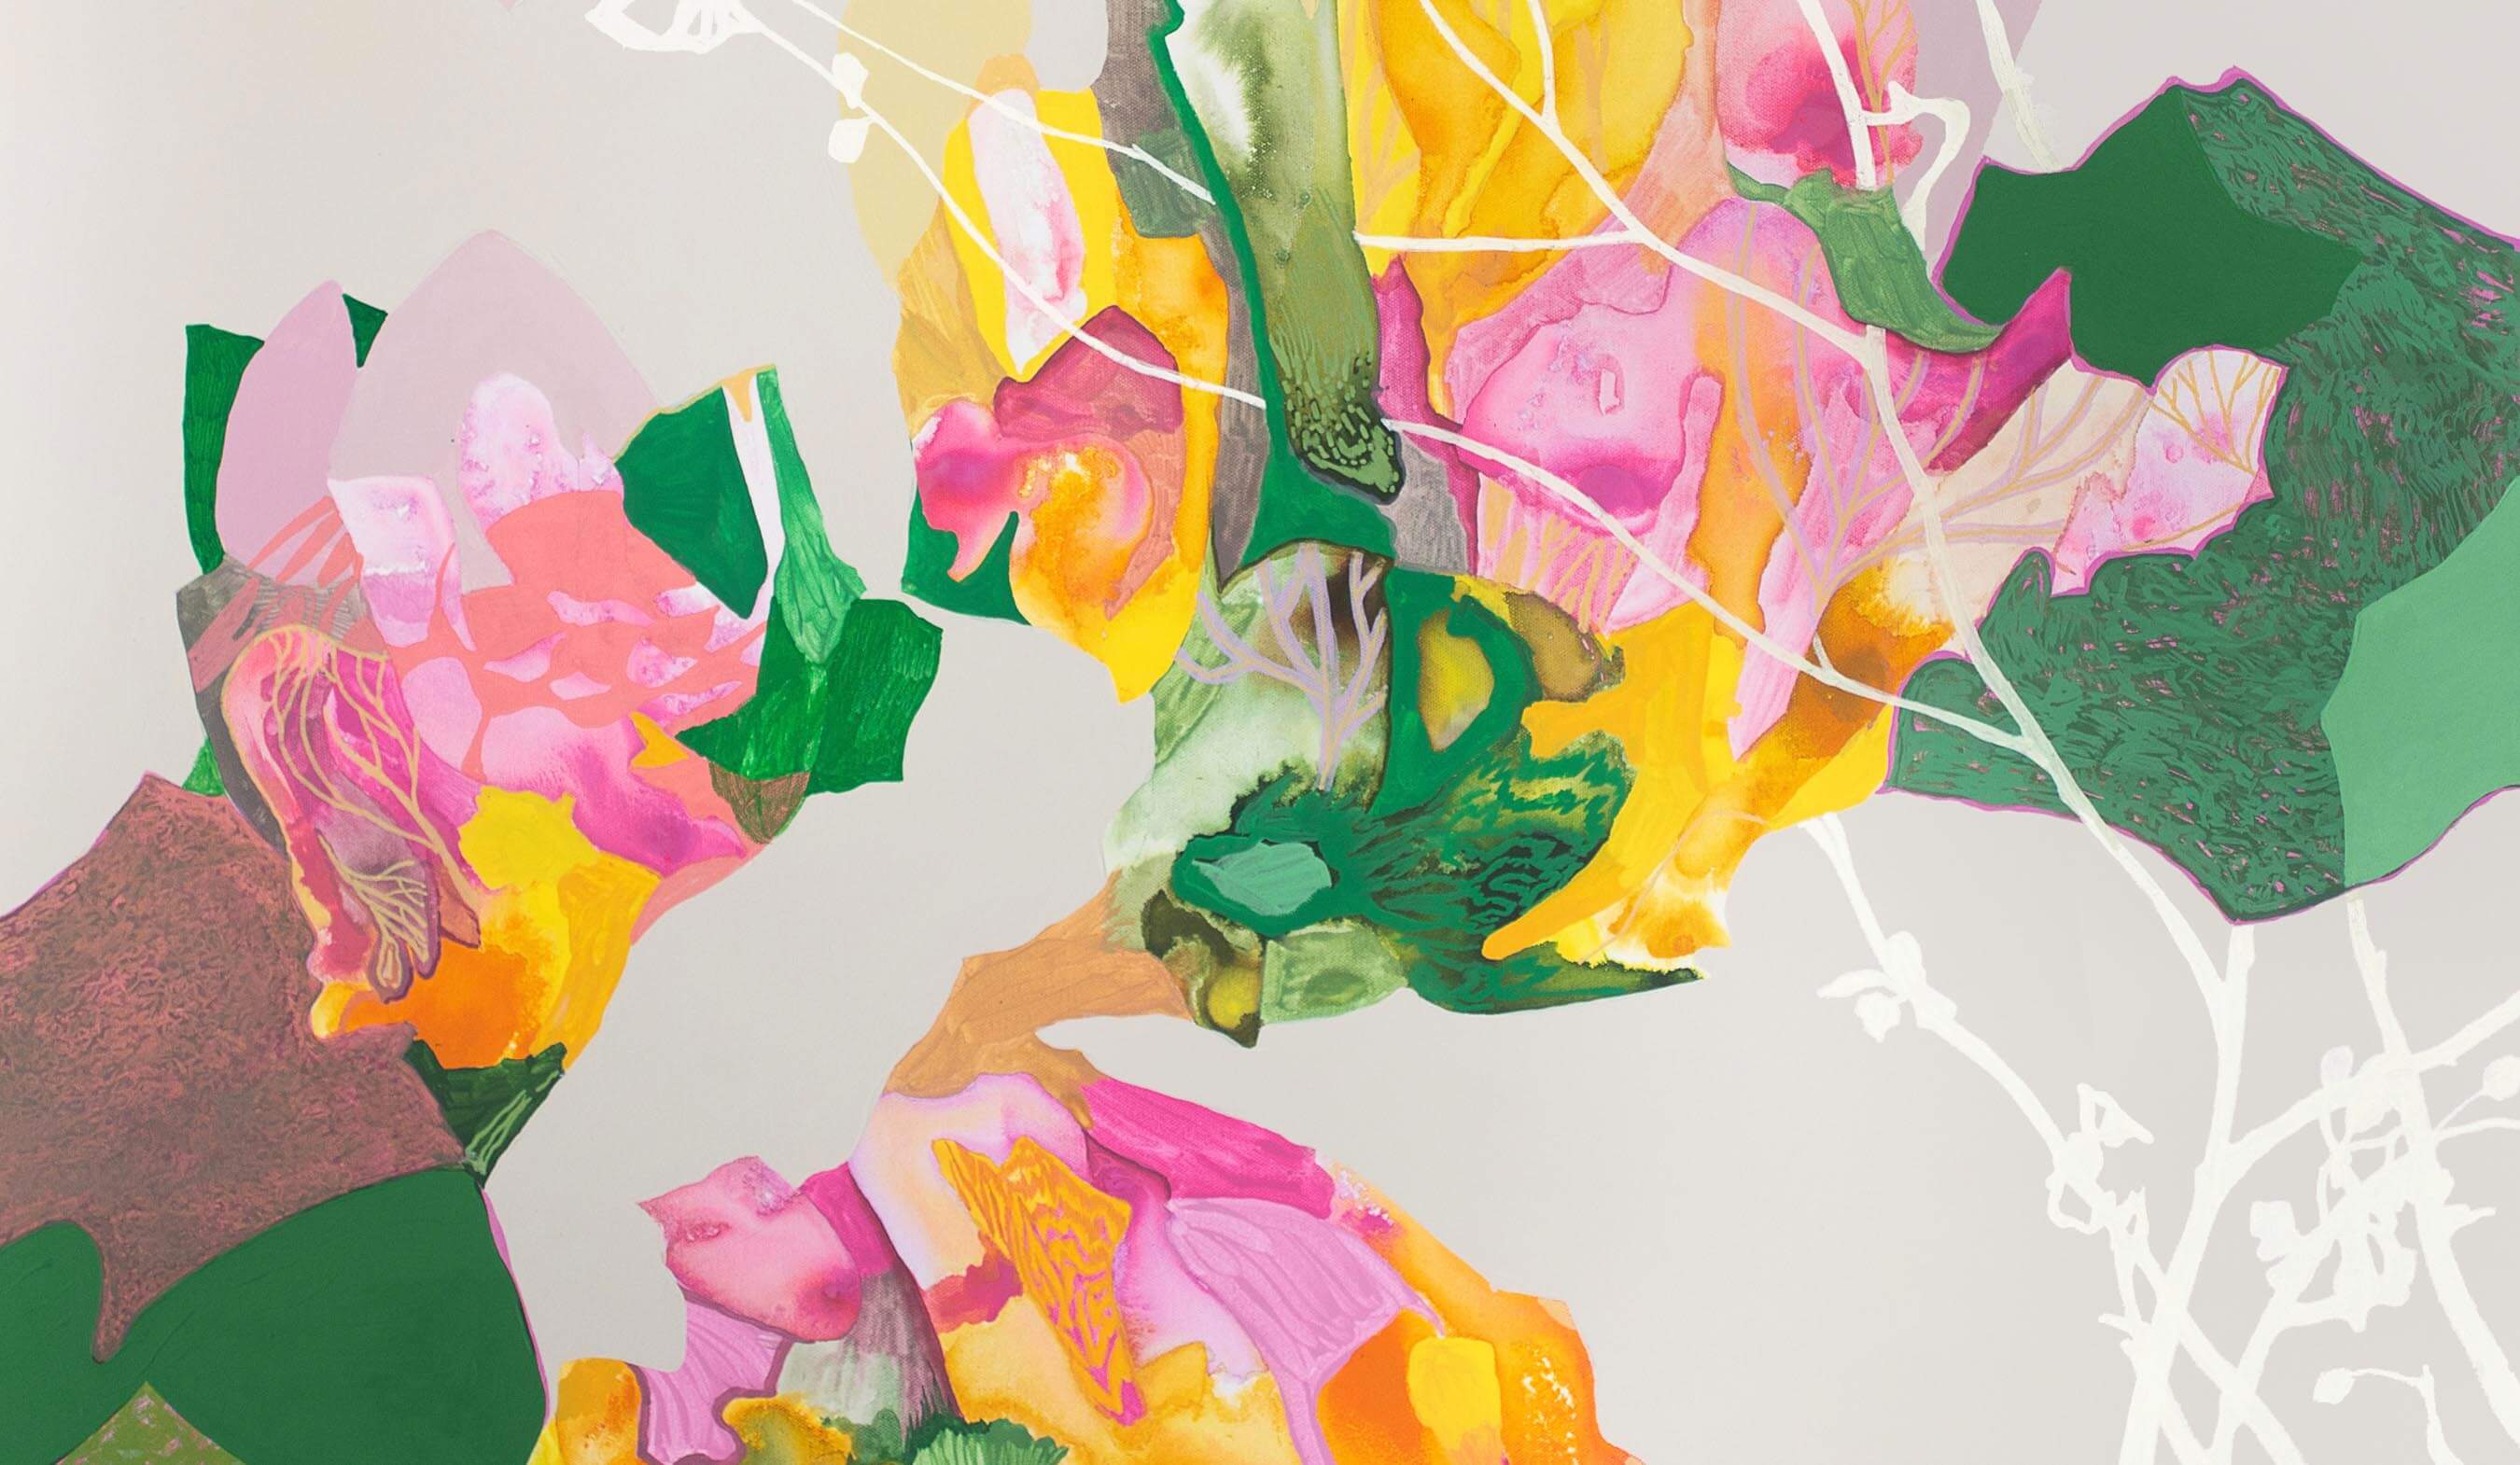 Butterfly Art  Modern, Colorful Poster by Elise Thomason – Elise Thomason  Print Studio